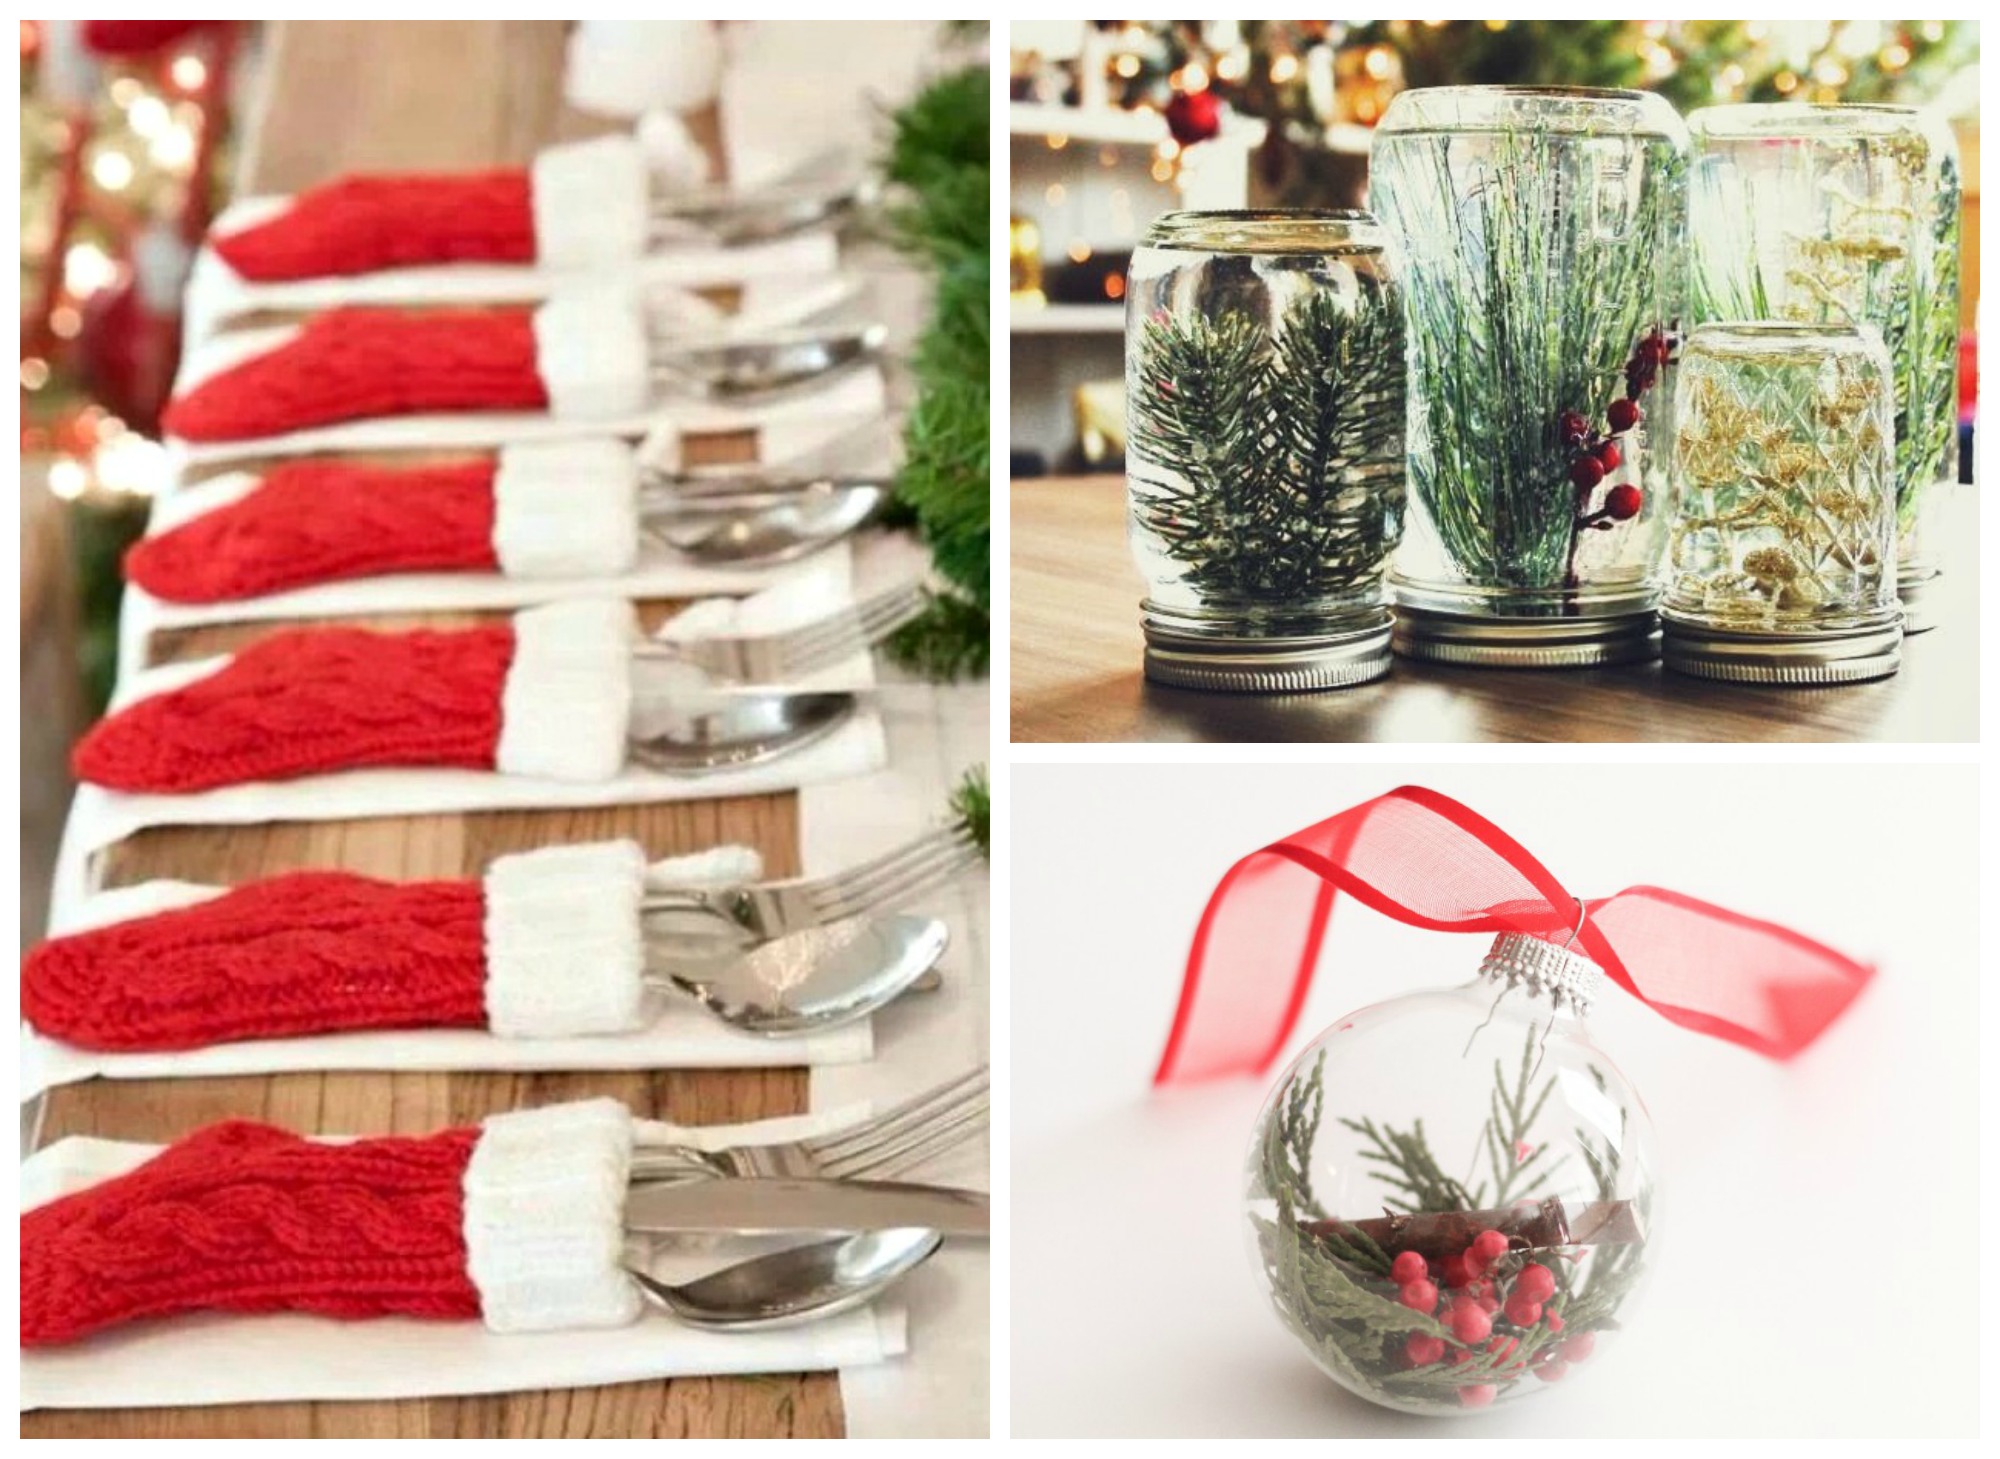 41 Easy Diy Christmas Decorations - Homemade Holiday Decor